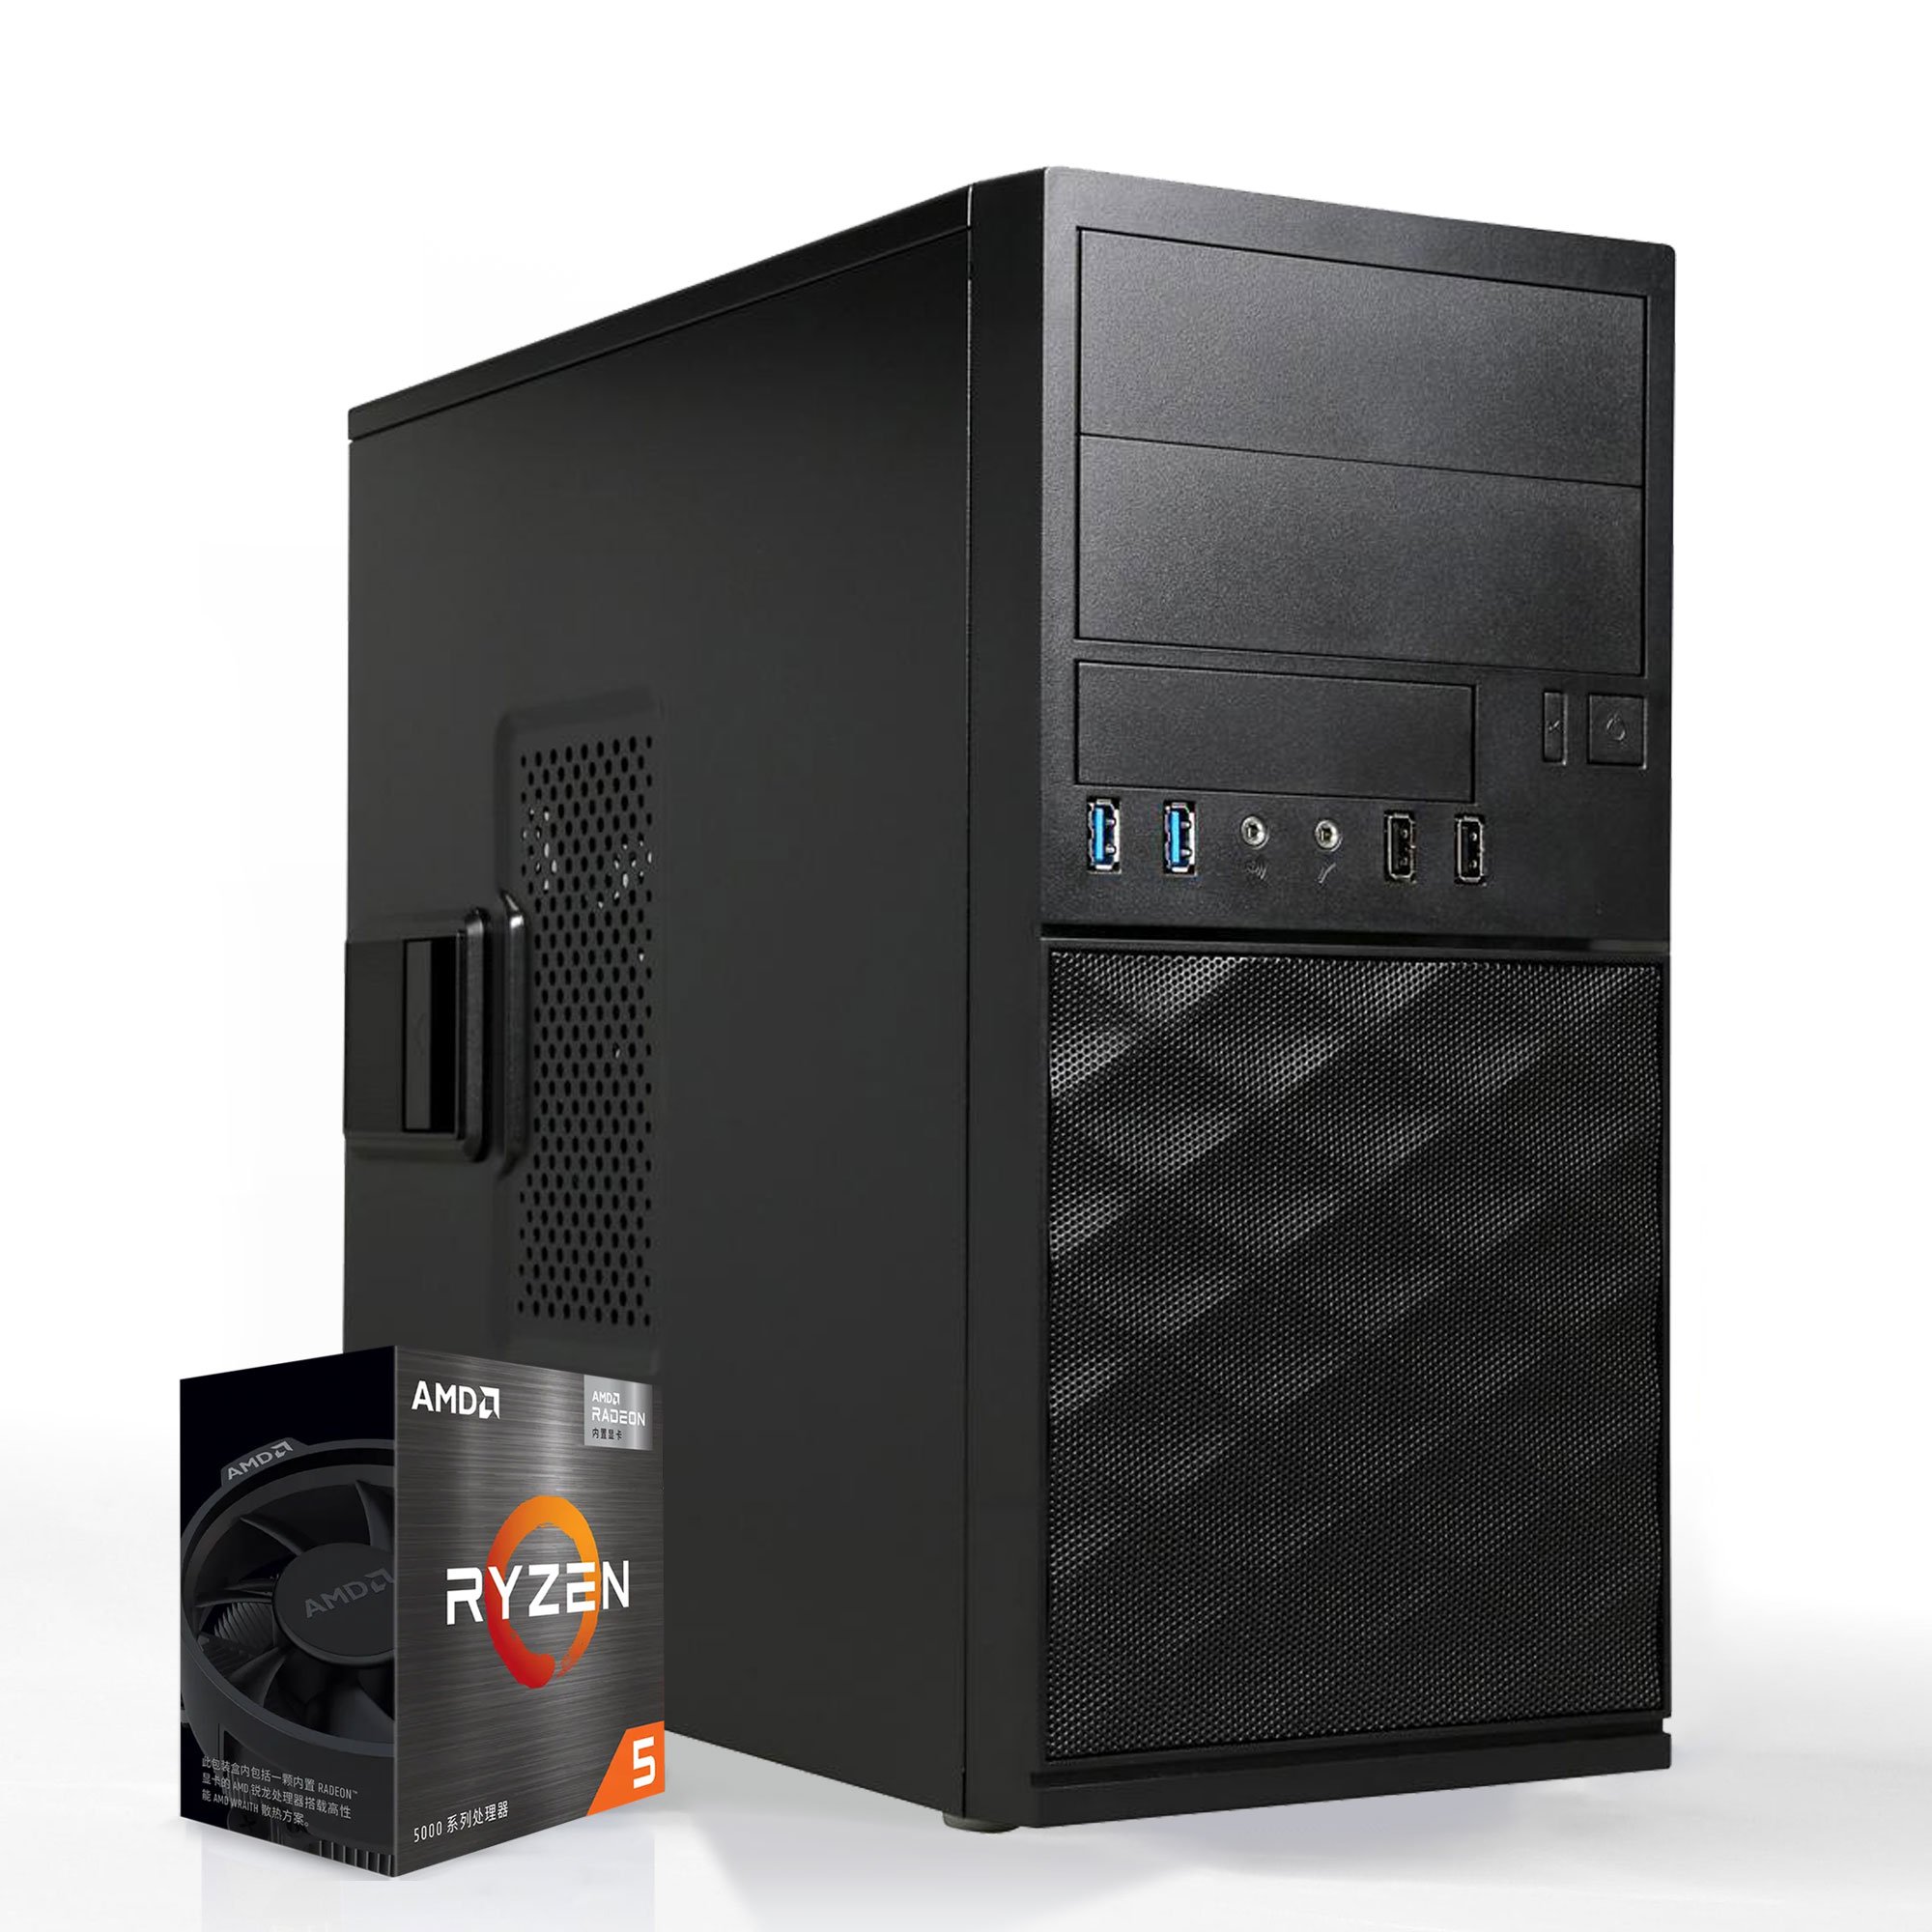 AMD Ryzen 5 5600G Mini PC | Desktop PC for Business